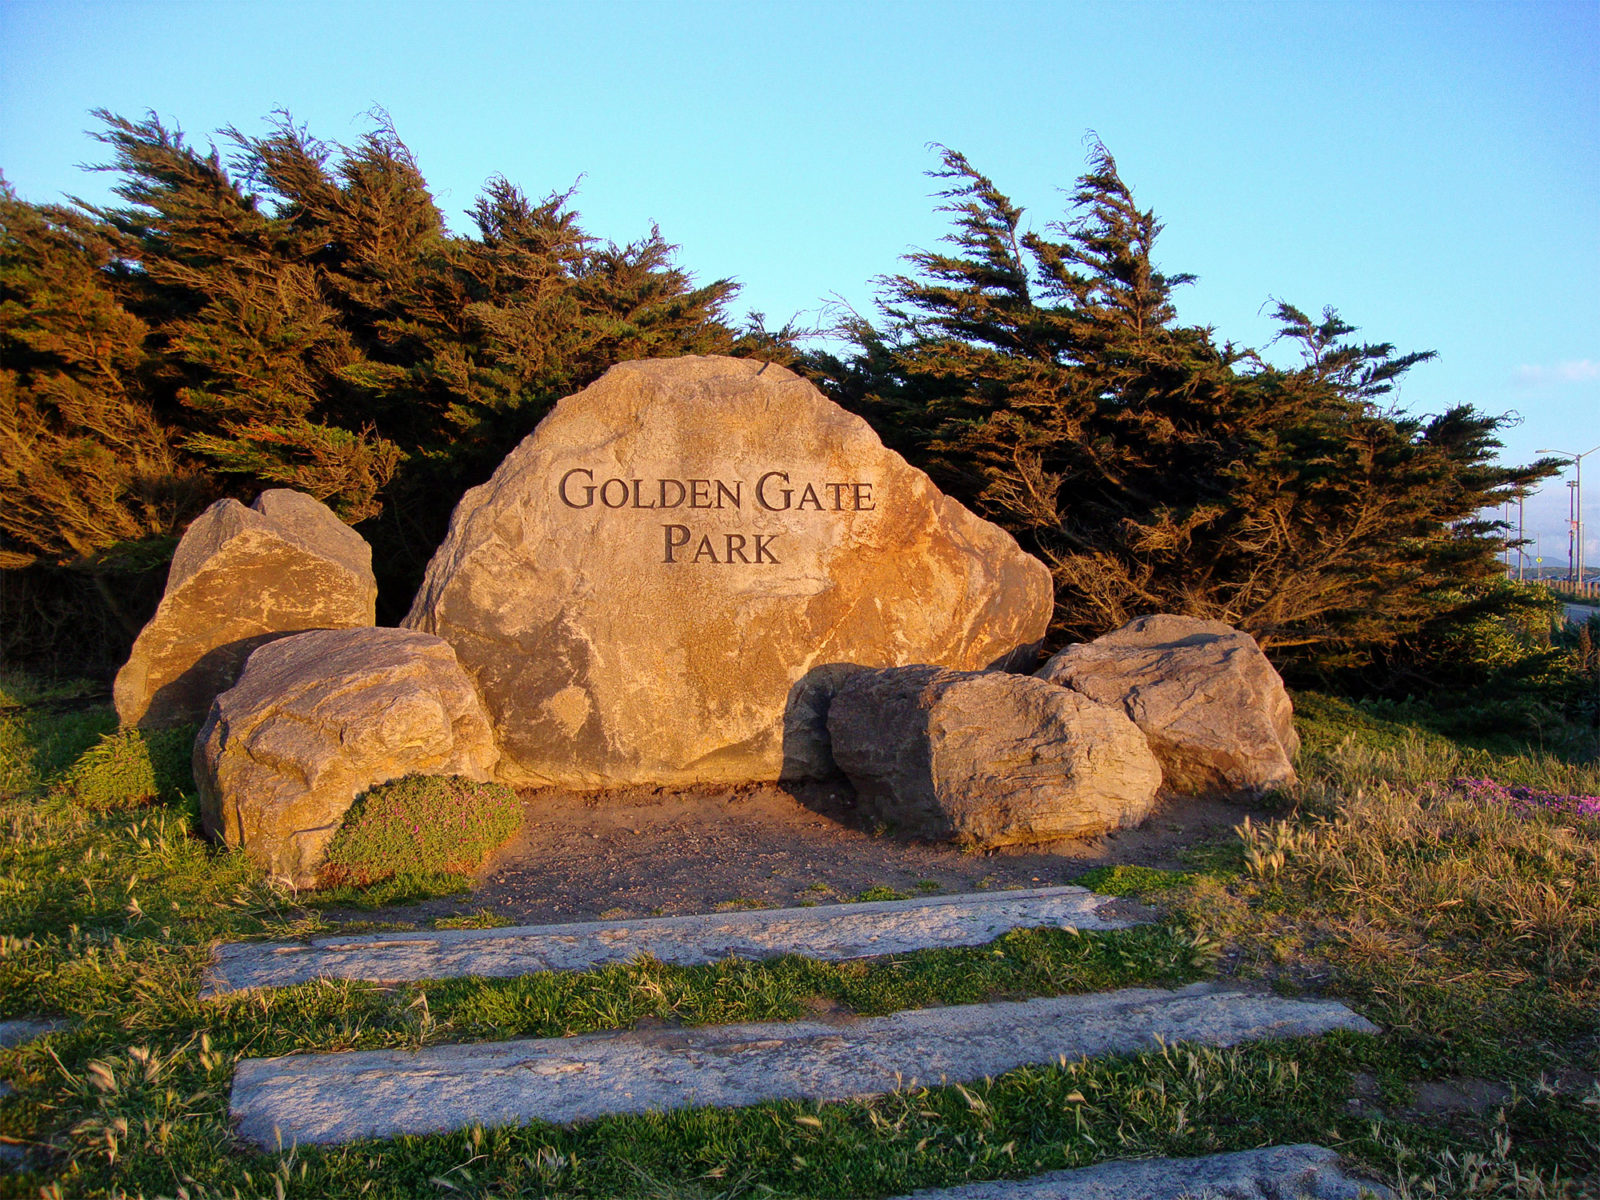 De ingang van Golden Gate Park in San Francisco